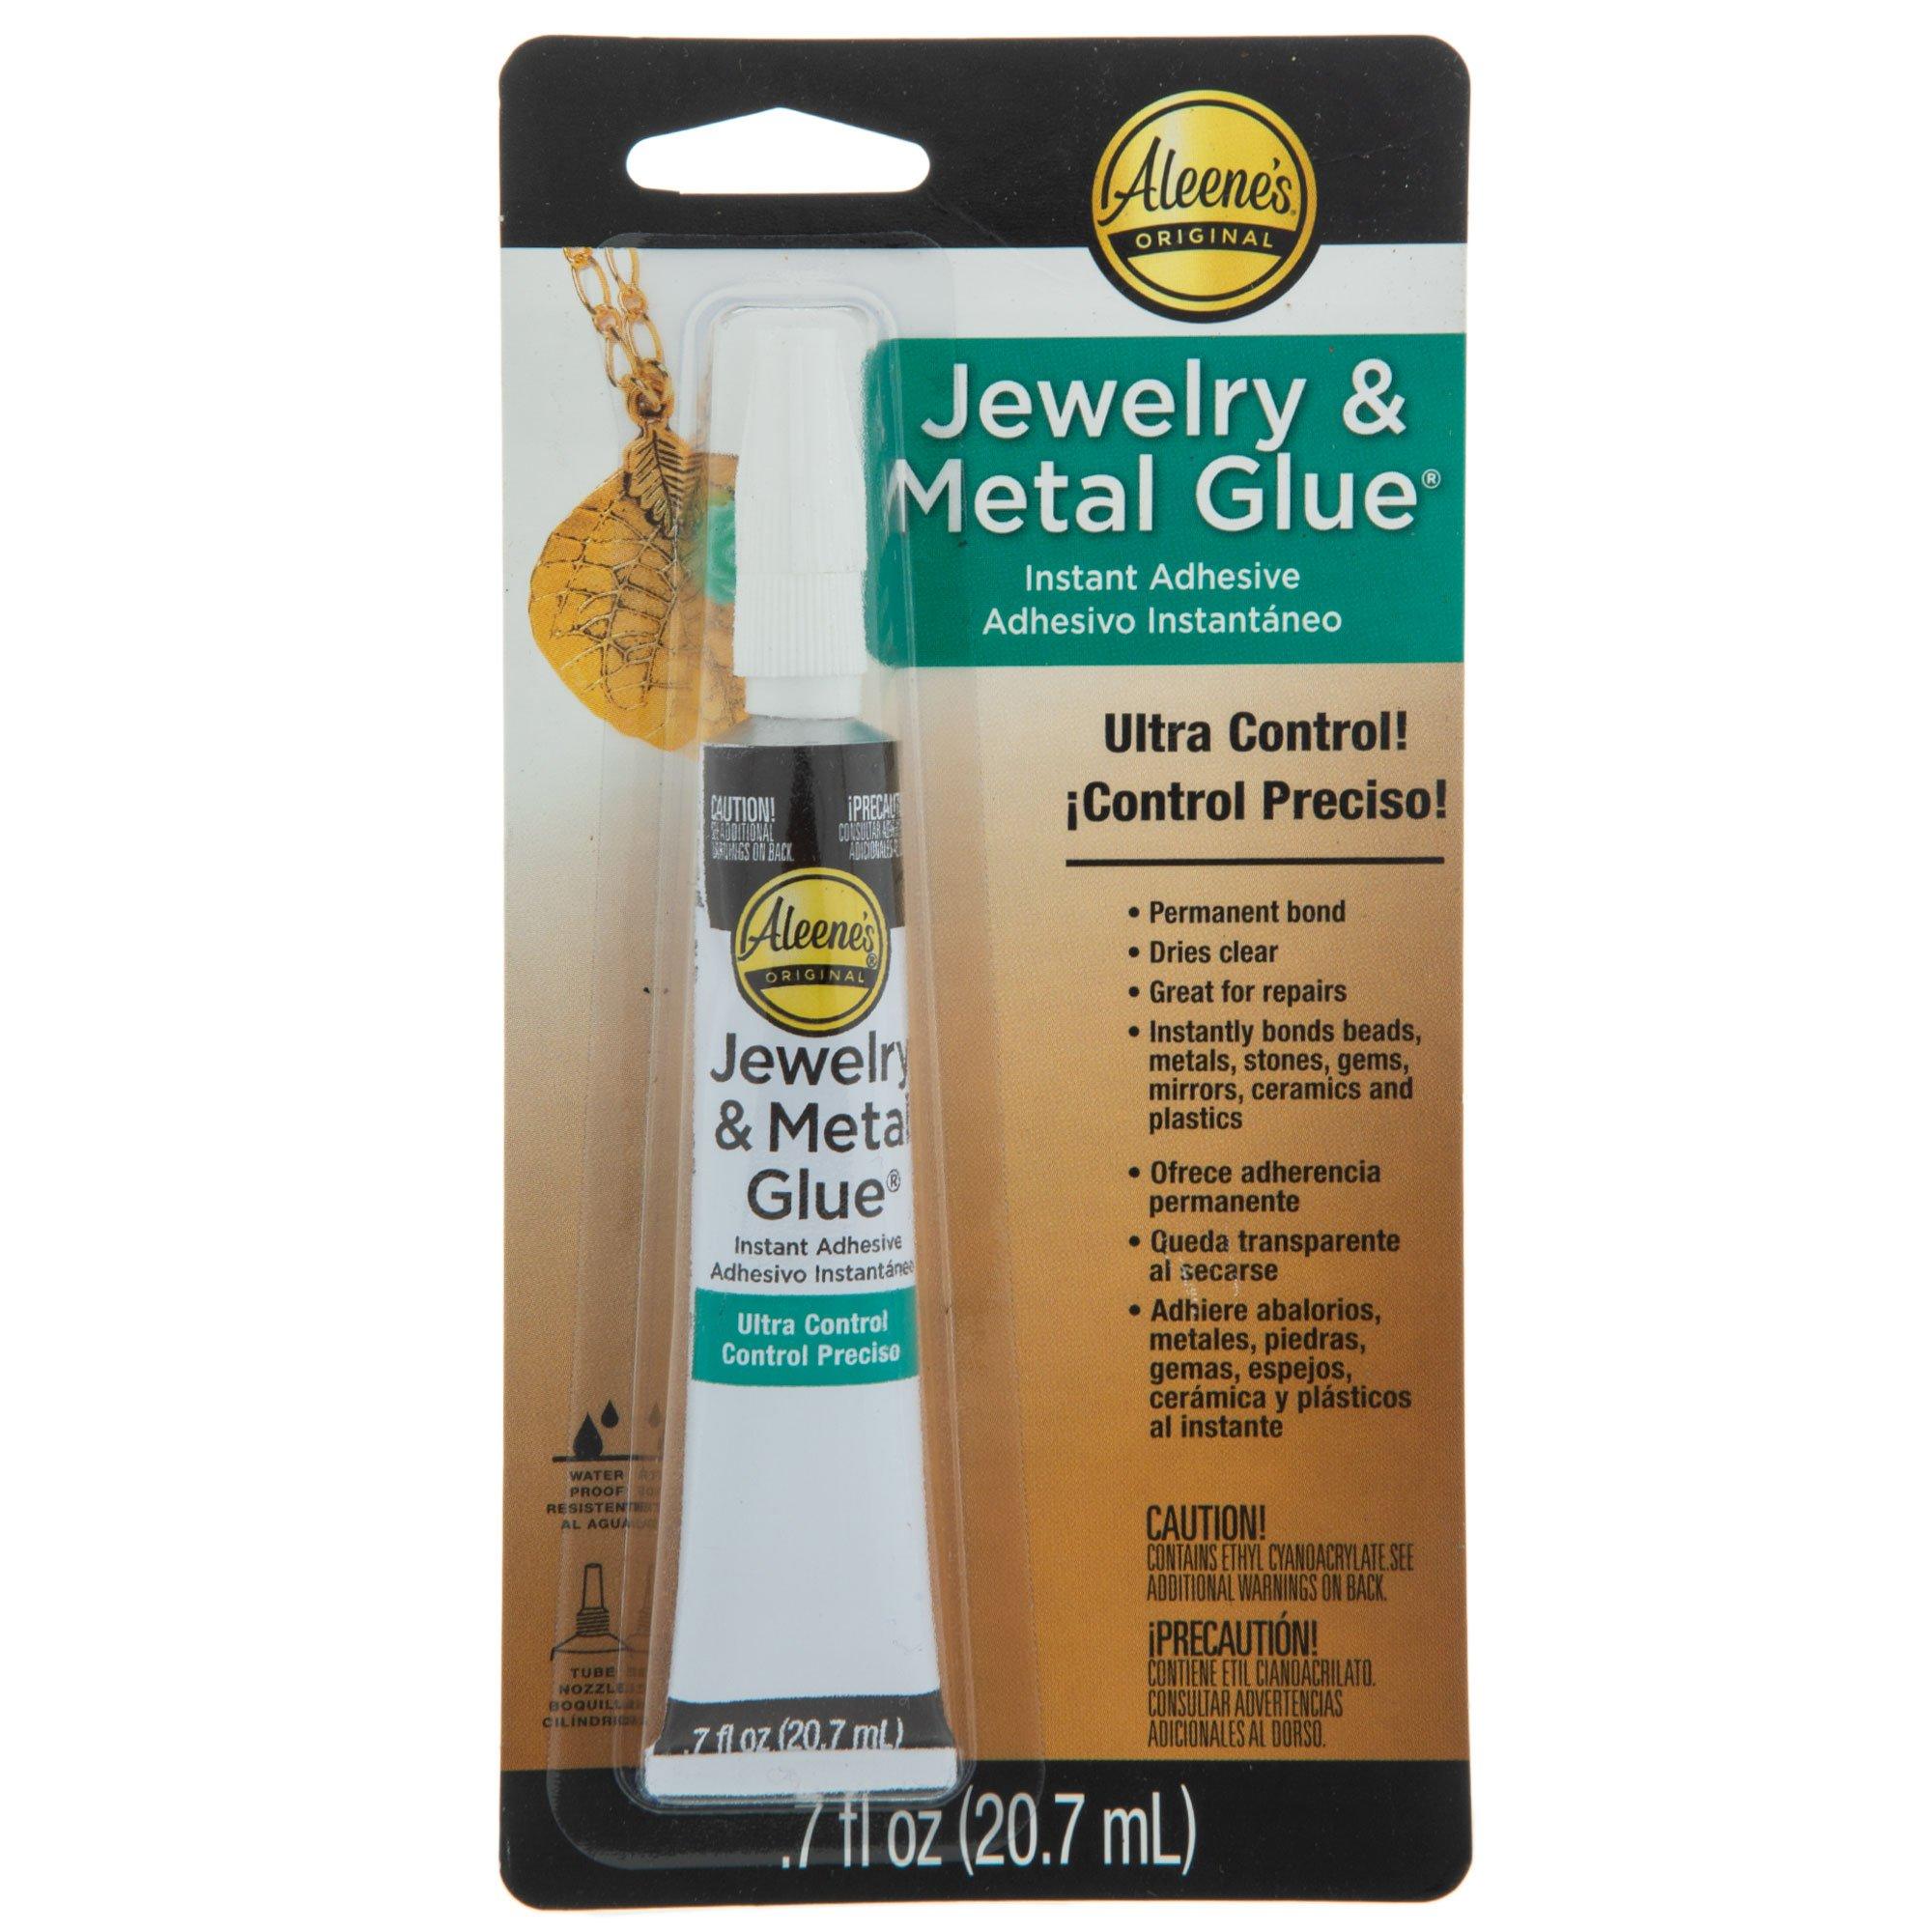 Aleenes Jewelry & Metal Glue - 3 count, 0.3 fl oz tube